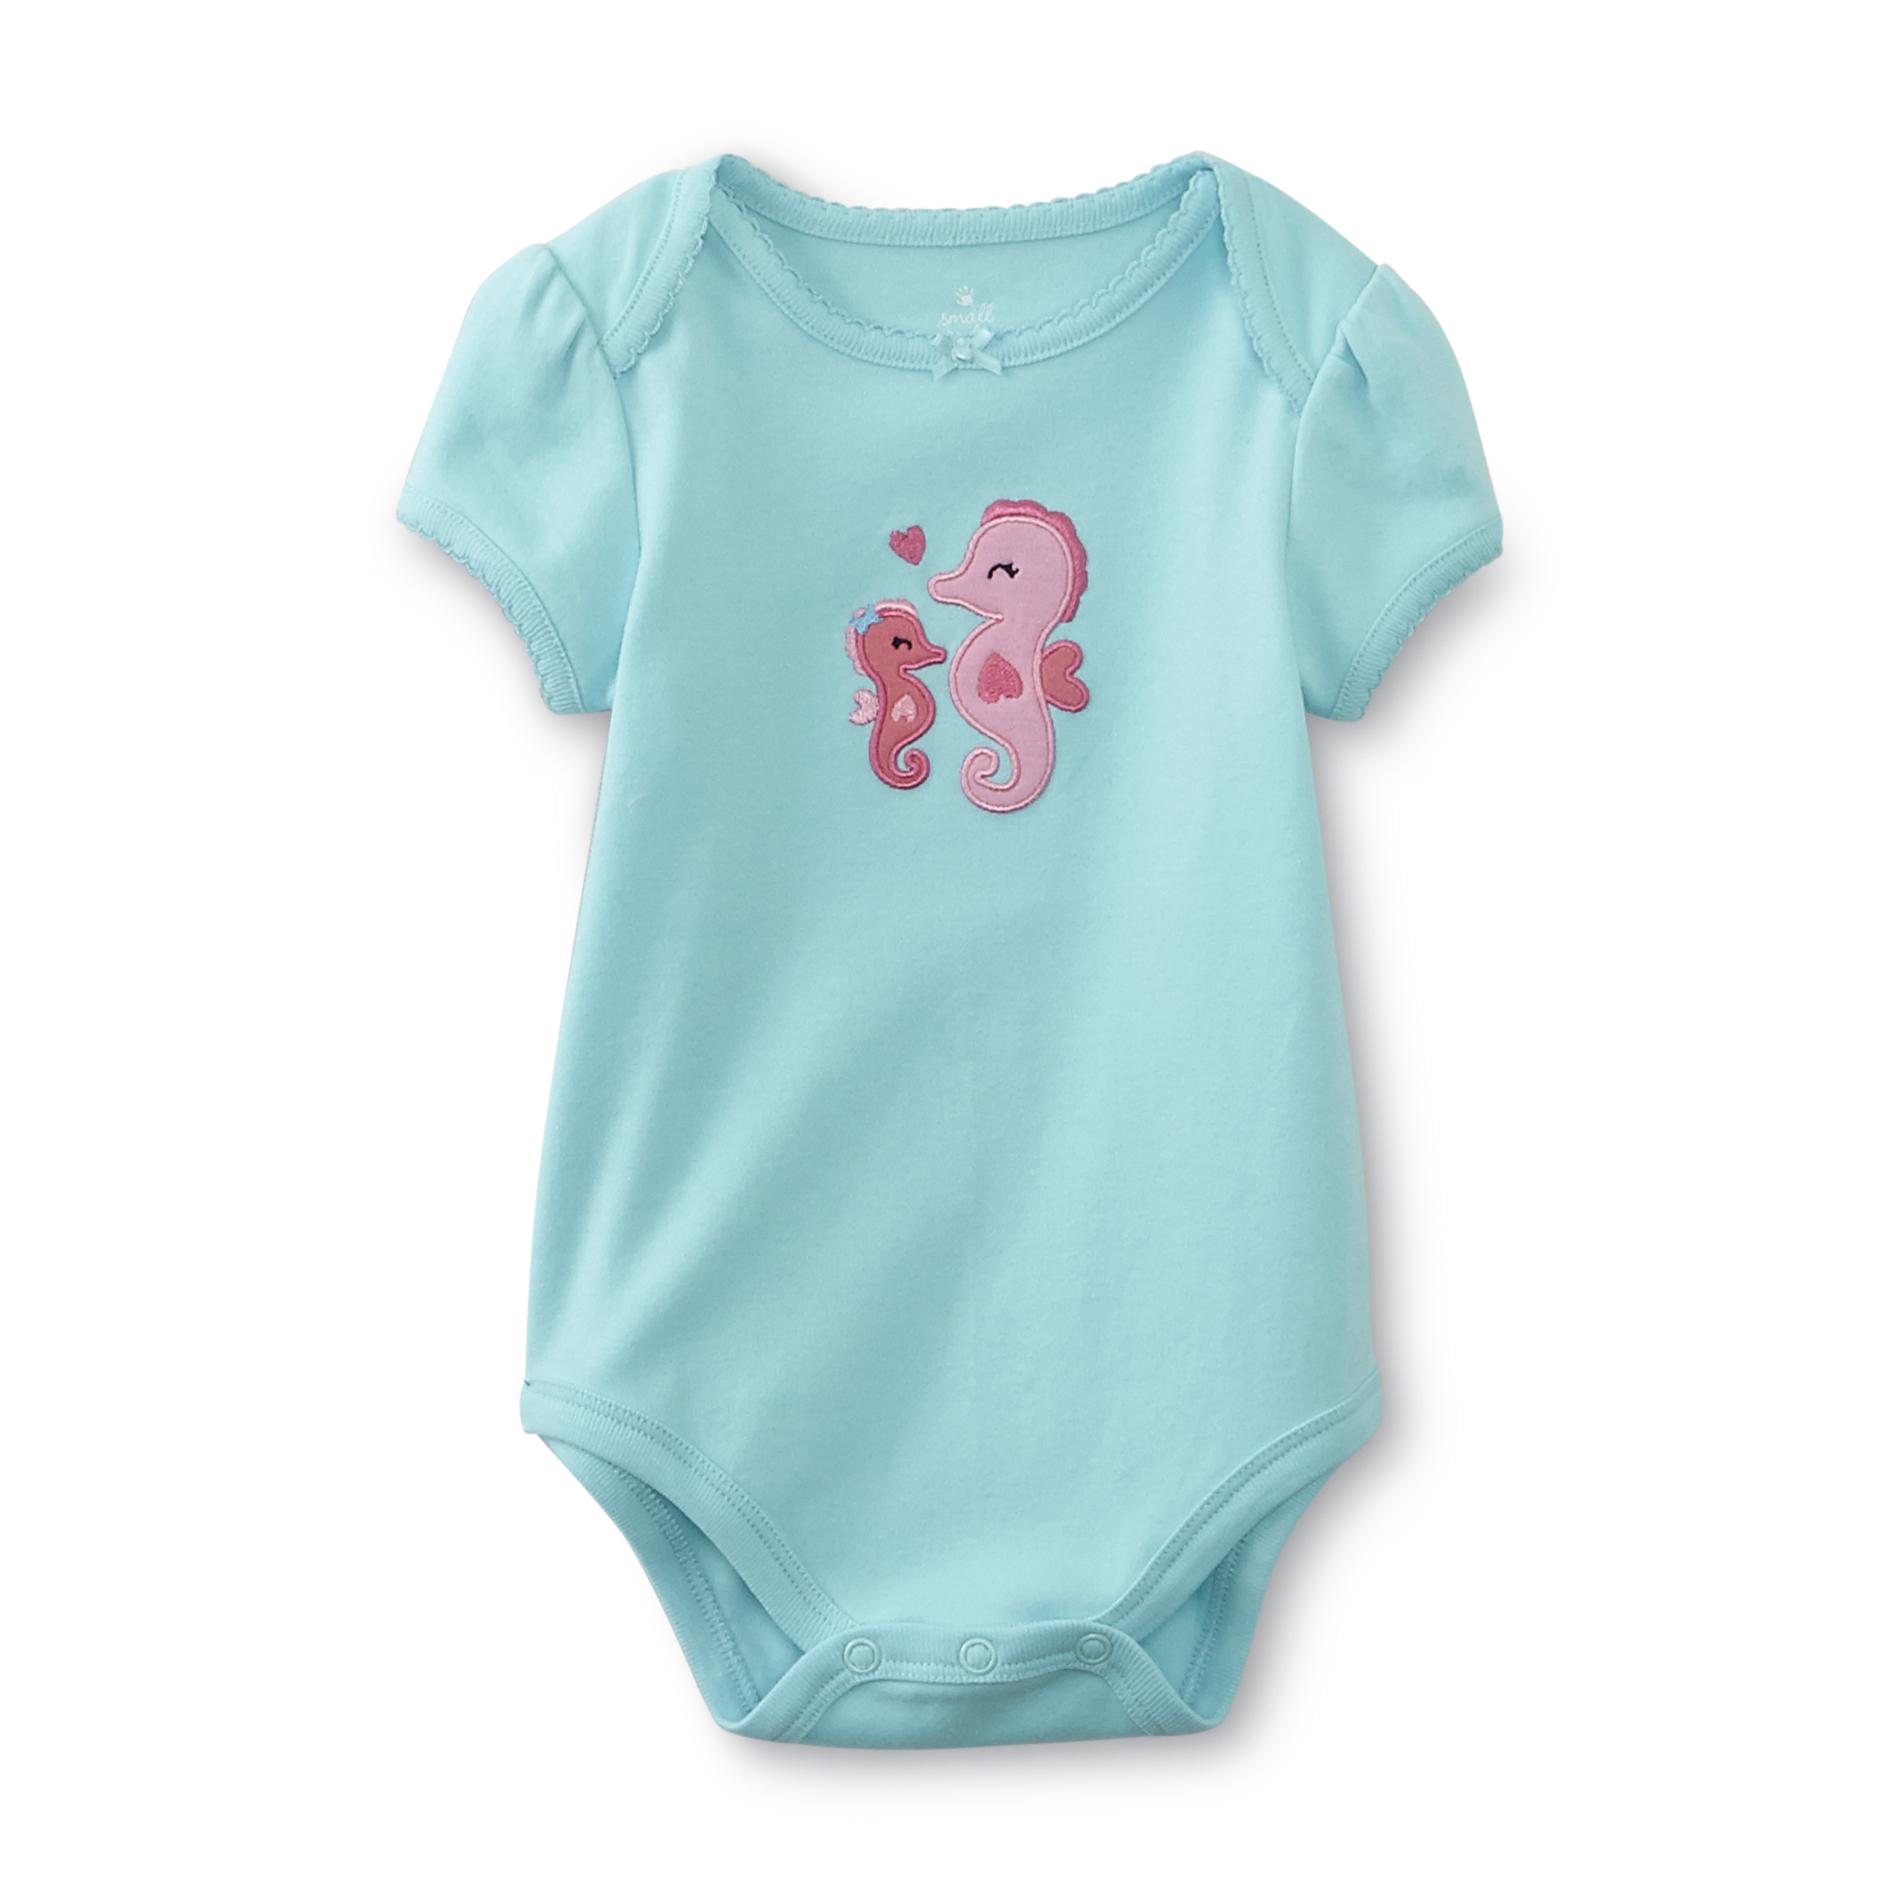 Small Wonders Newborn & Infant Girl's Bodysuit - Seahorse Love